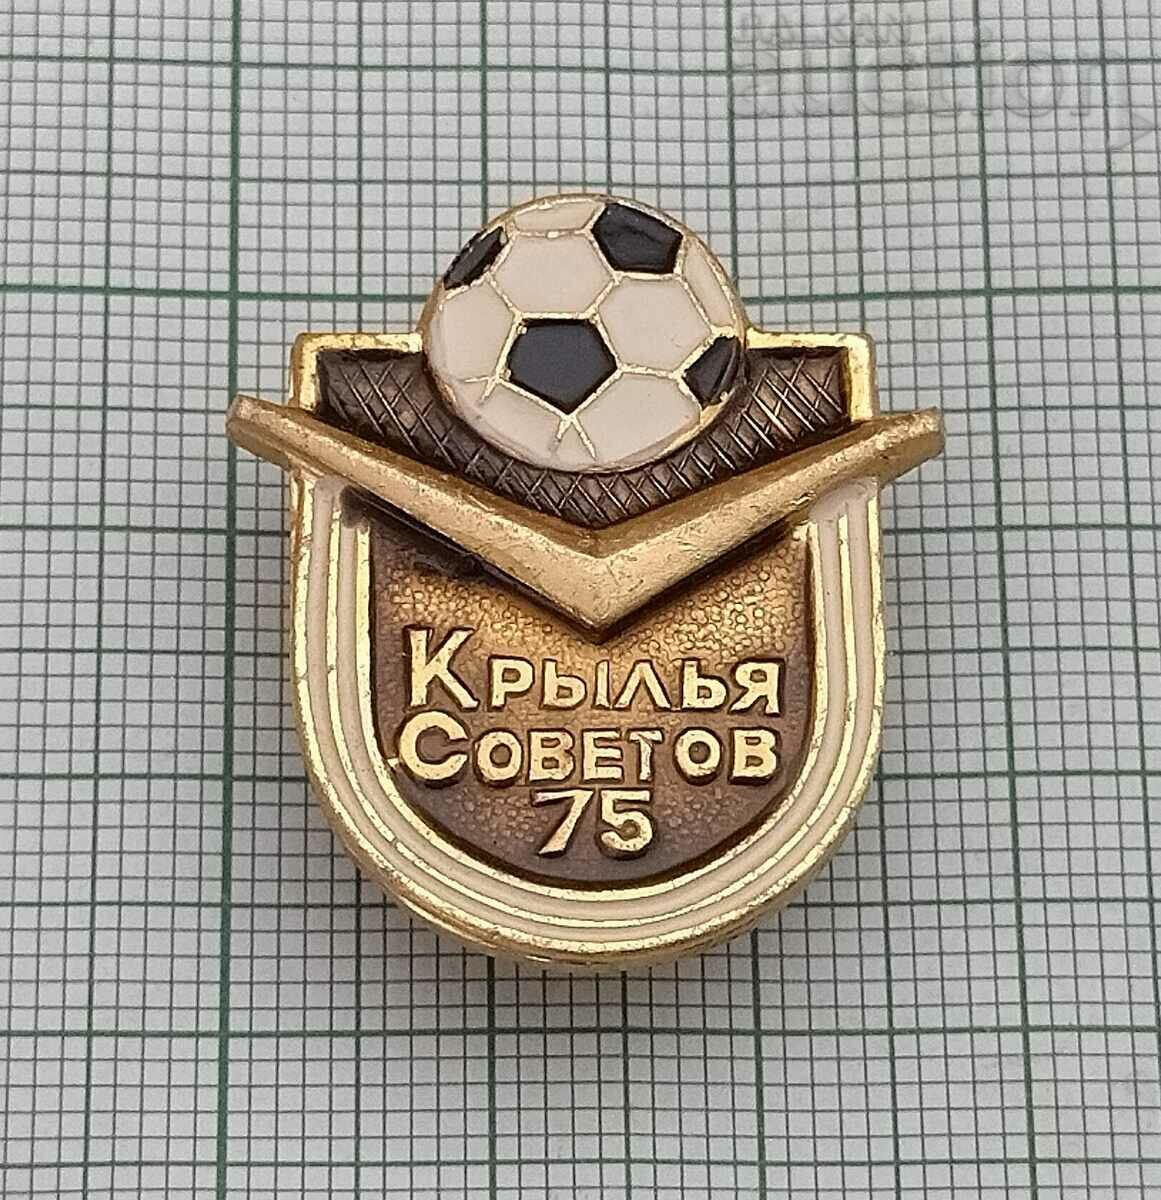 SOVIET WINGS KUIBISHEV/SAMARA 1975 USSR FOOTBALL BADGE